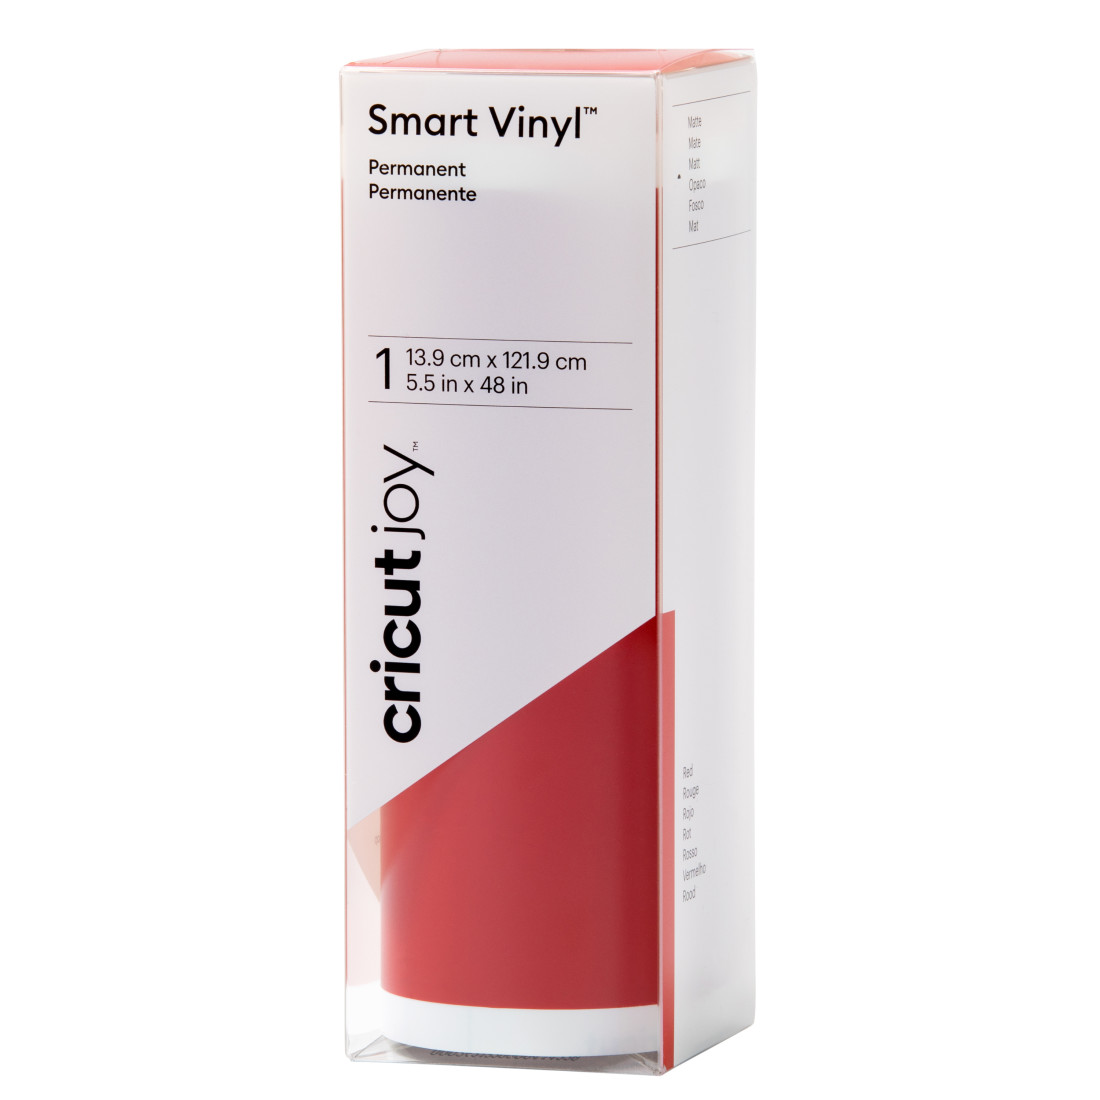 Cricut - Smart Vinyl – Permanent 12 ft - Red